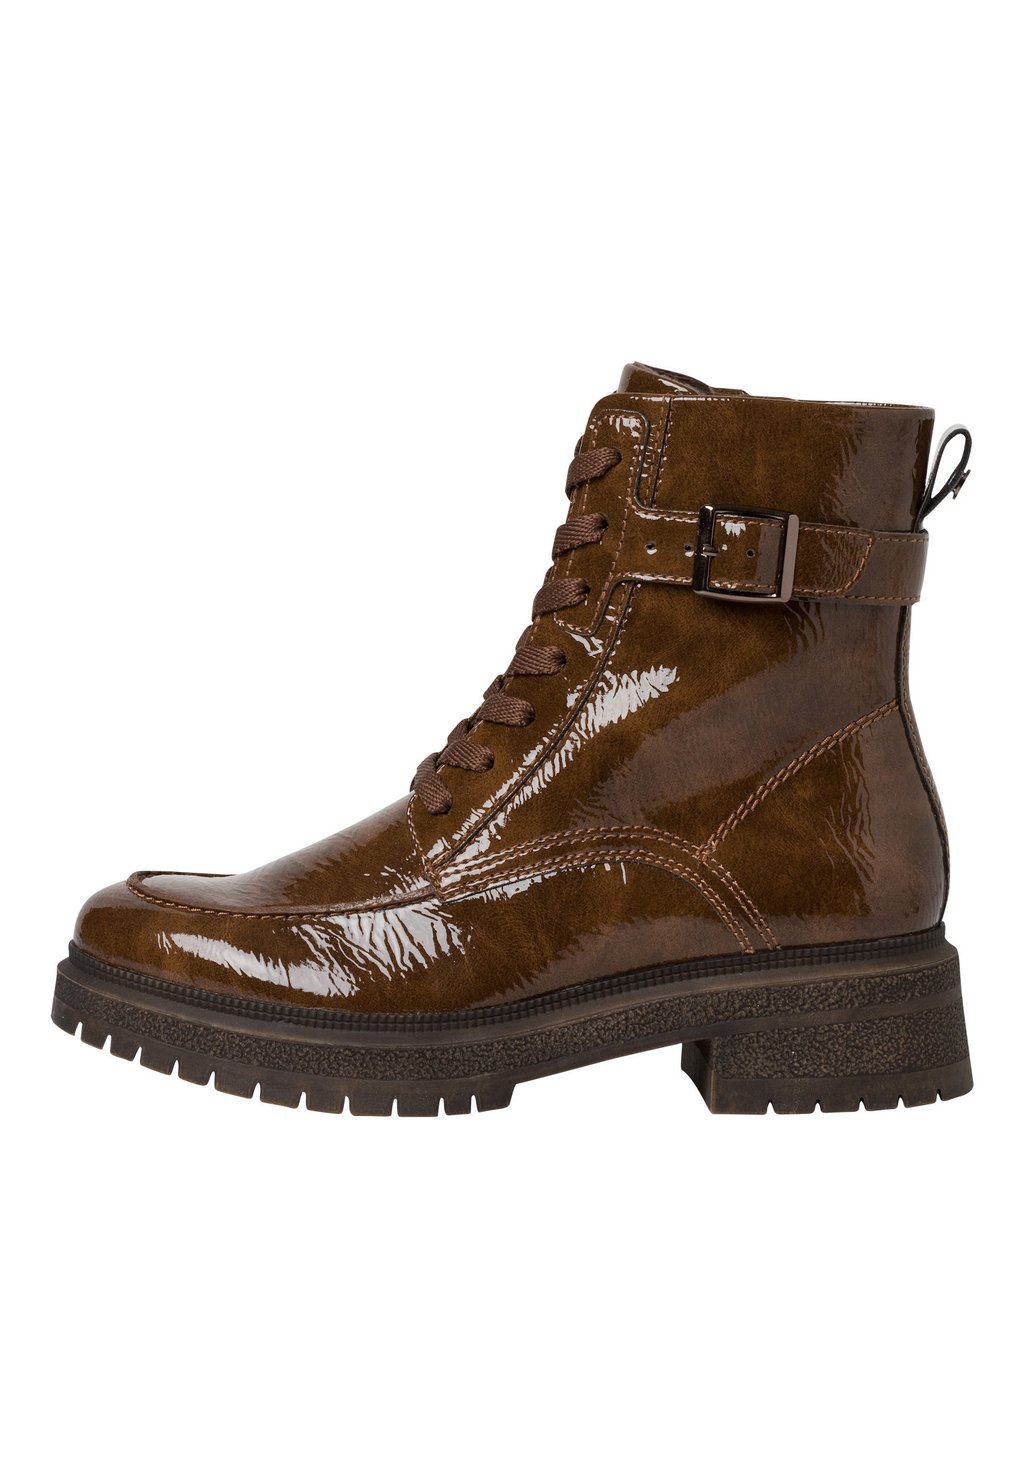 Ботинки на шнуровке Tamaris, коричневый ботинки на шнурках женские tamaris коричневый комб 37